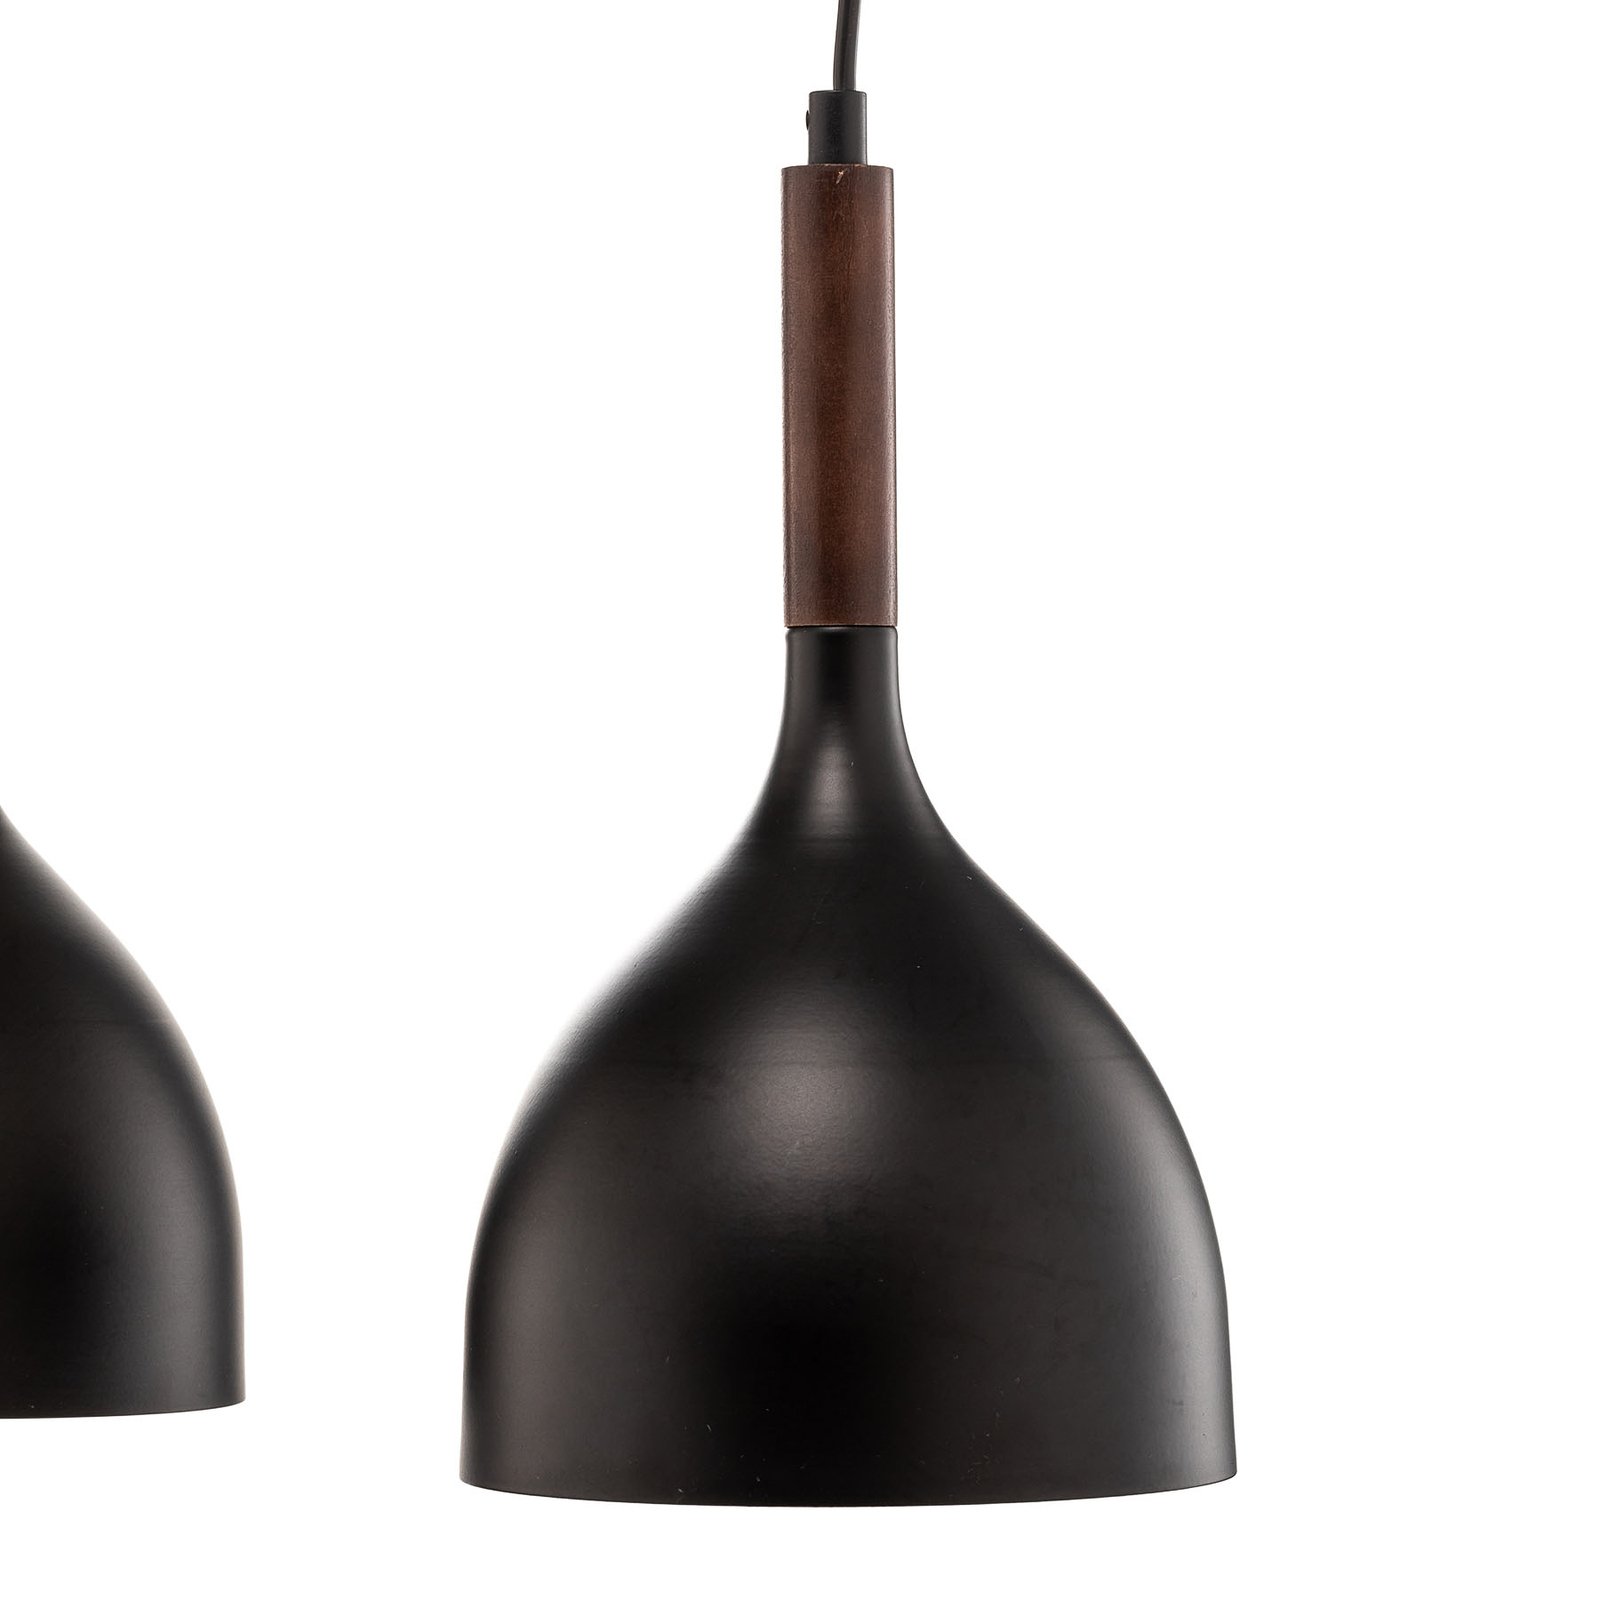 Noak hanglamp 4-lamps lang naturel/zwart hout